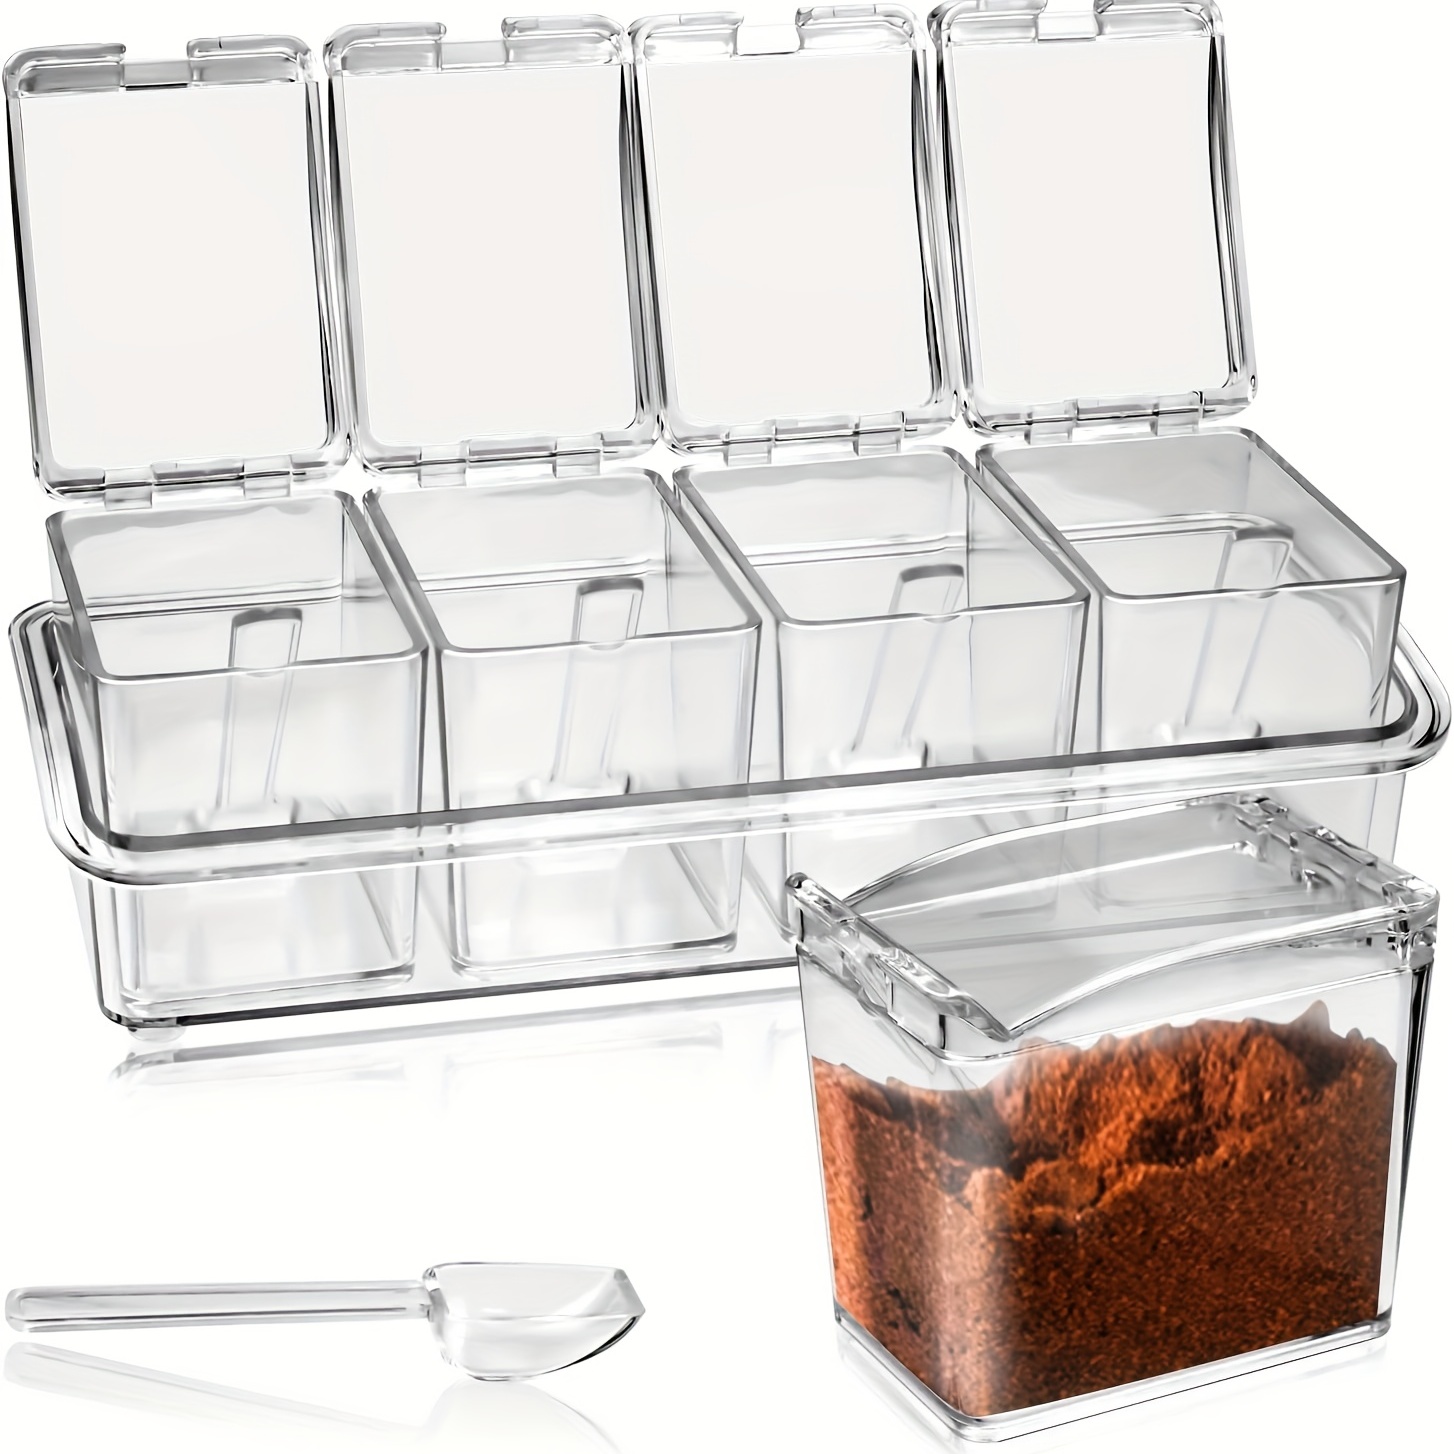 12pcs/set 1oz 25ml Small Mini Plastic Sauce Cups Food Grade Plastic Oil  Sauce Storage Clear Boxes + Lids Travel BBQ Seasoning Case Box